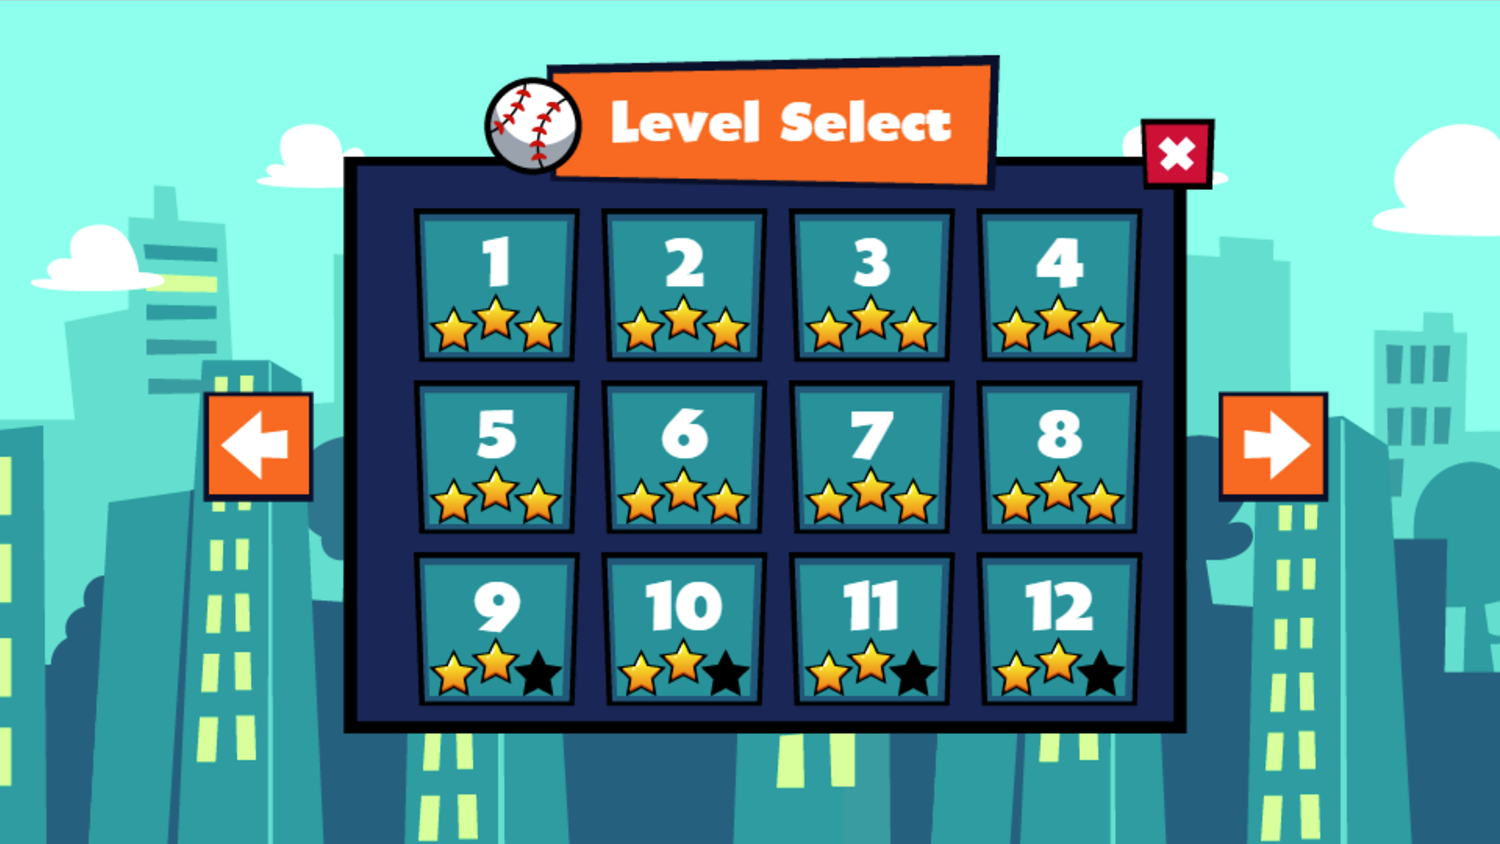 Extreme Baseball Game Level Select Screen Screenshot.